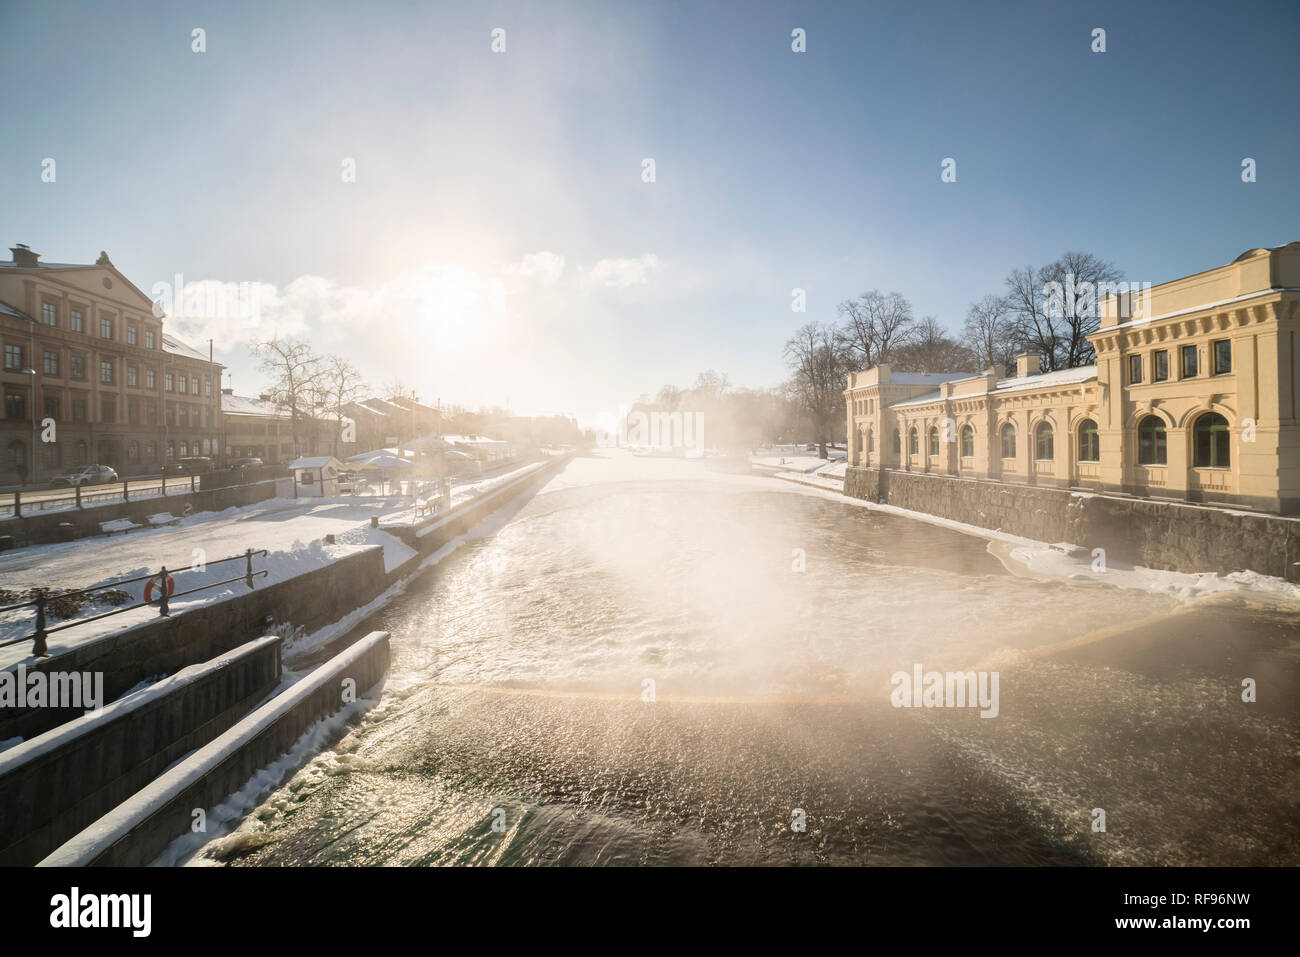 Winter view of the Fyris river (Fyrisan) at Islandsfallet, Uppsala, Sweden, Scandinavia Stock Photo